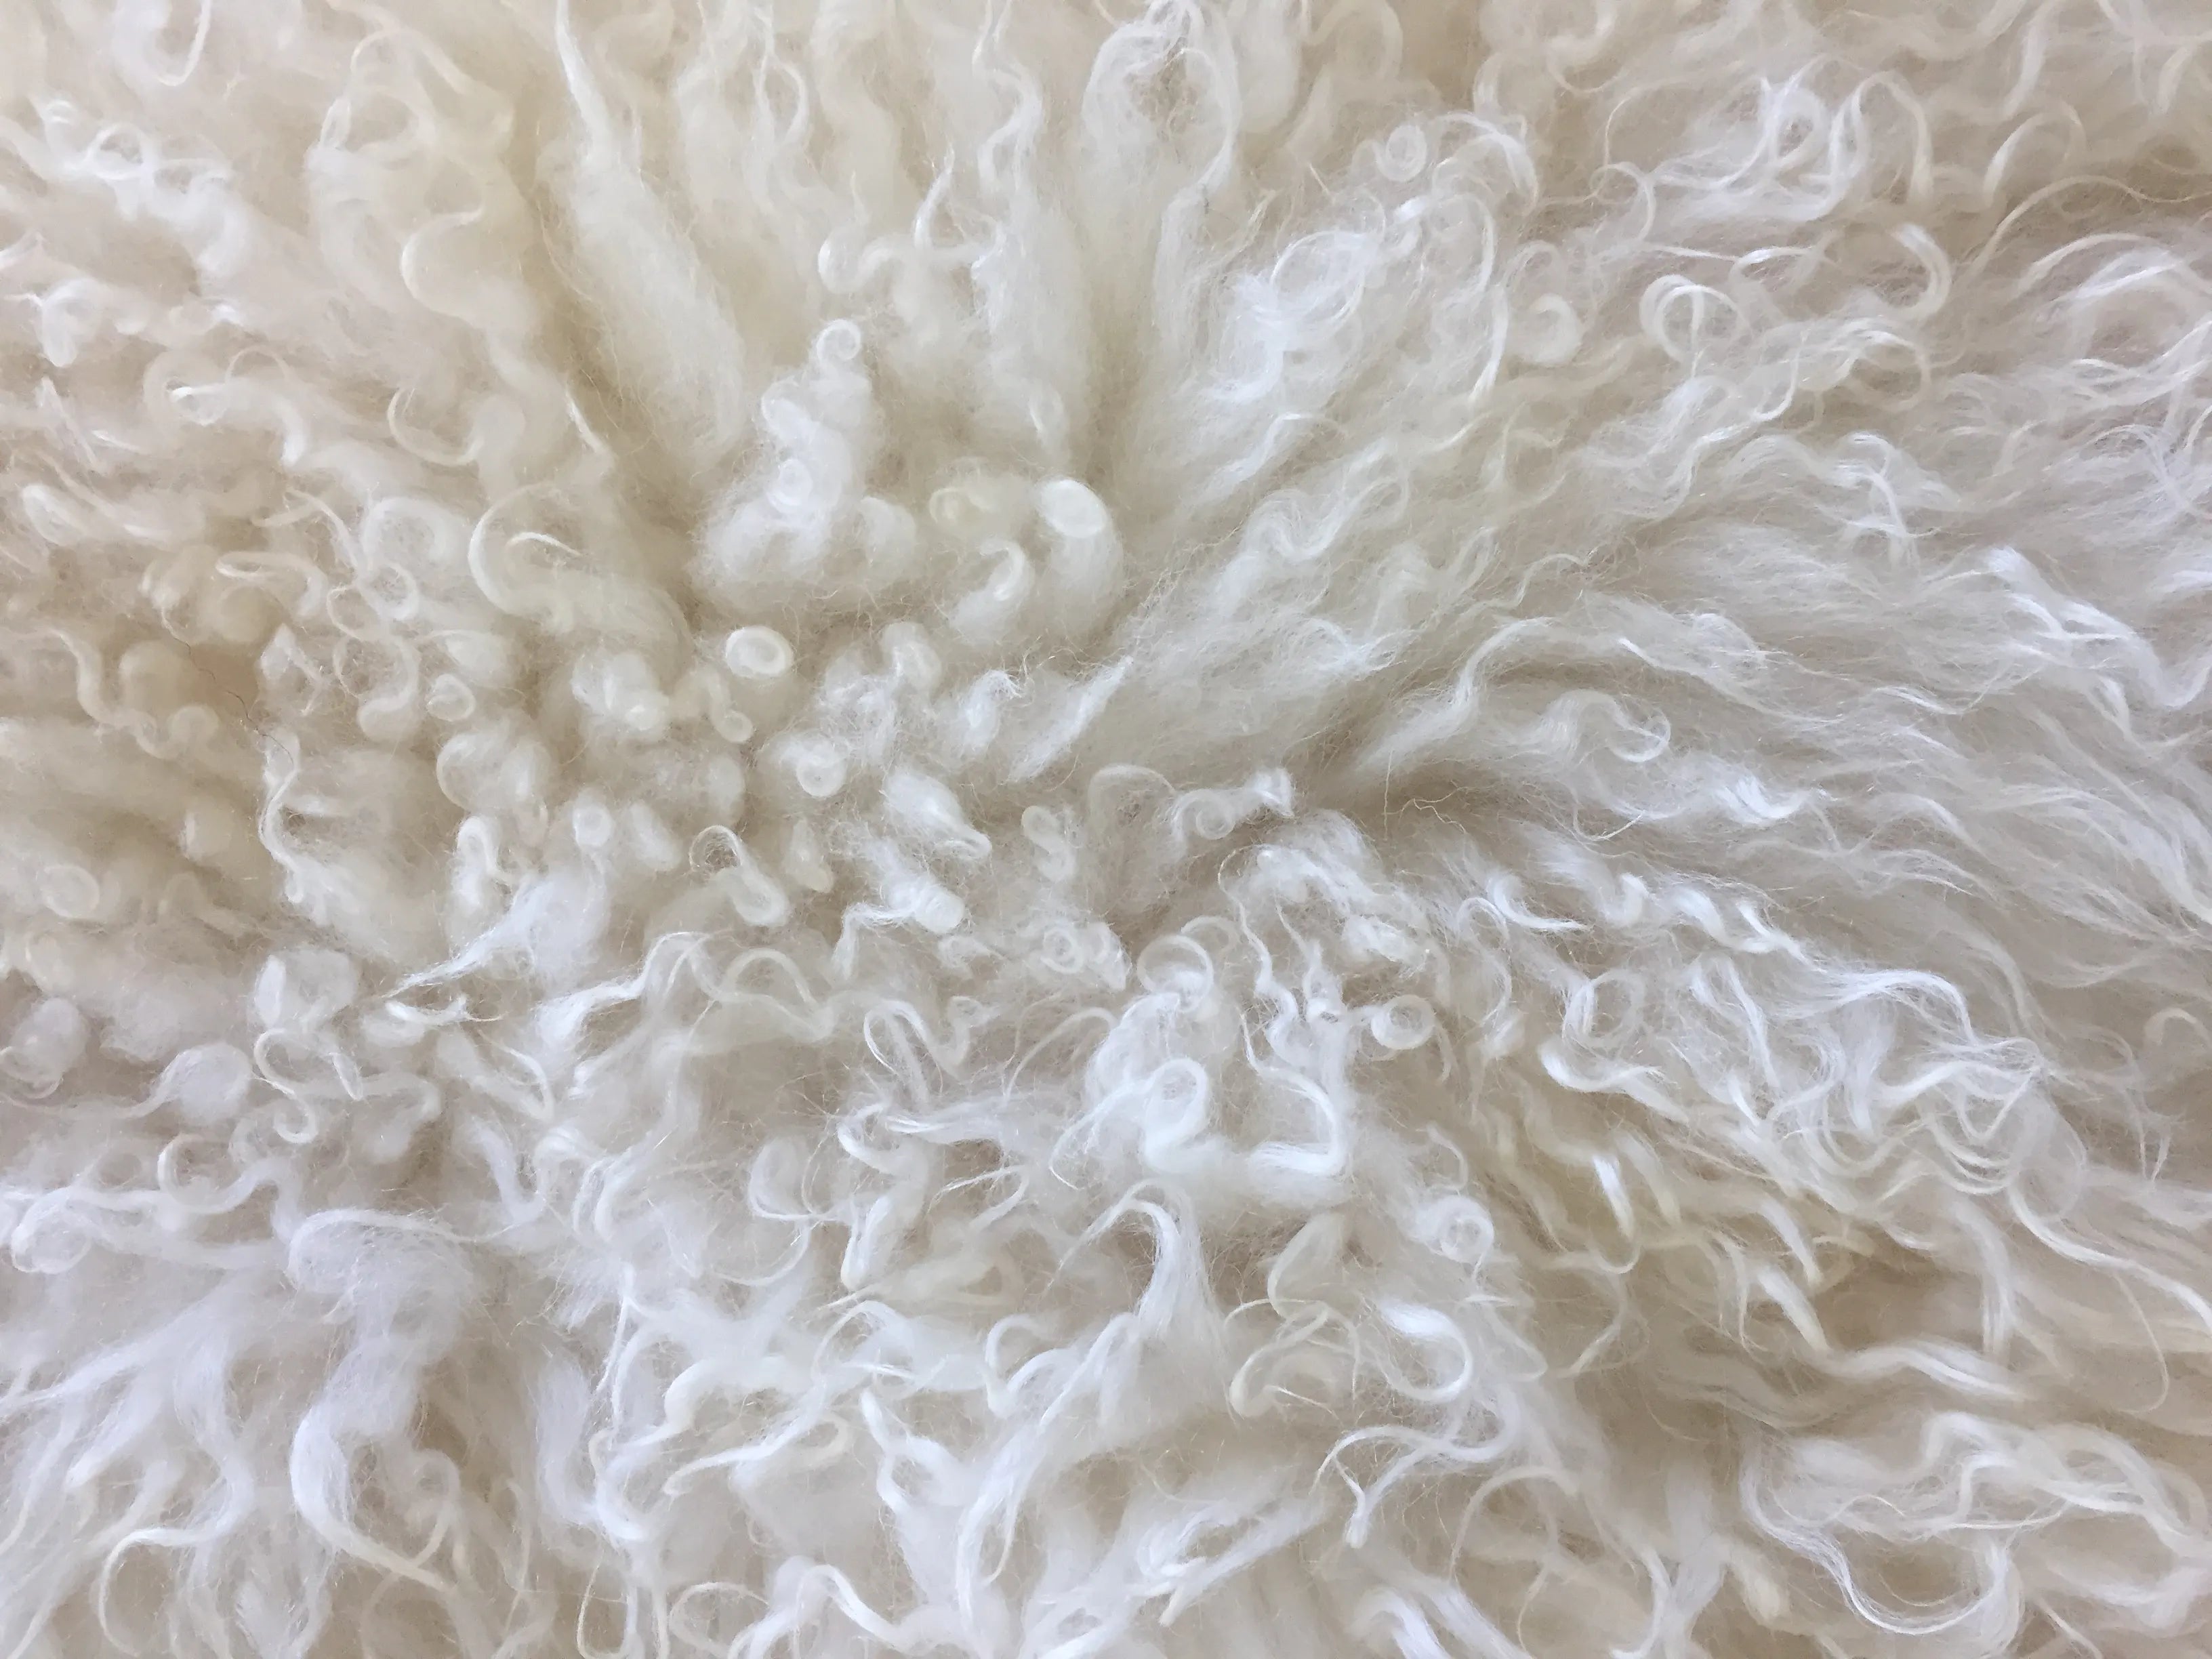 Islandic seat sheepskin offwhite curly